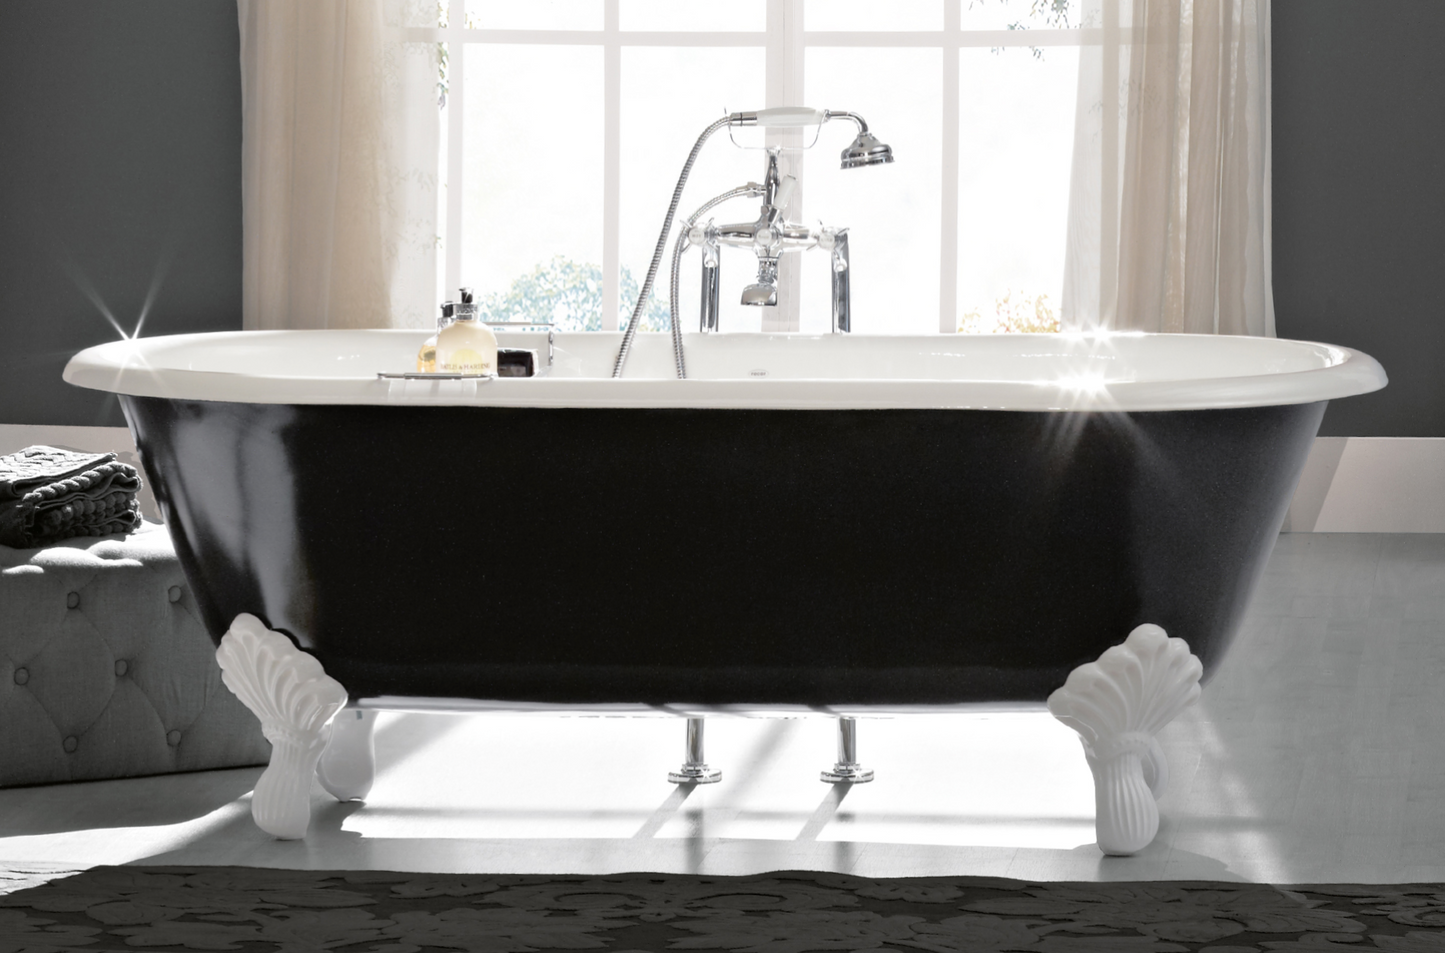 Cast iron bathtub with Vintage style legs